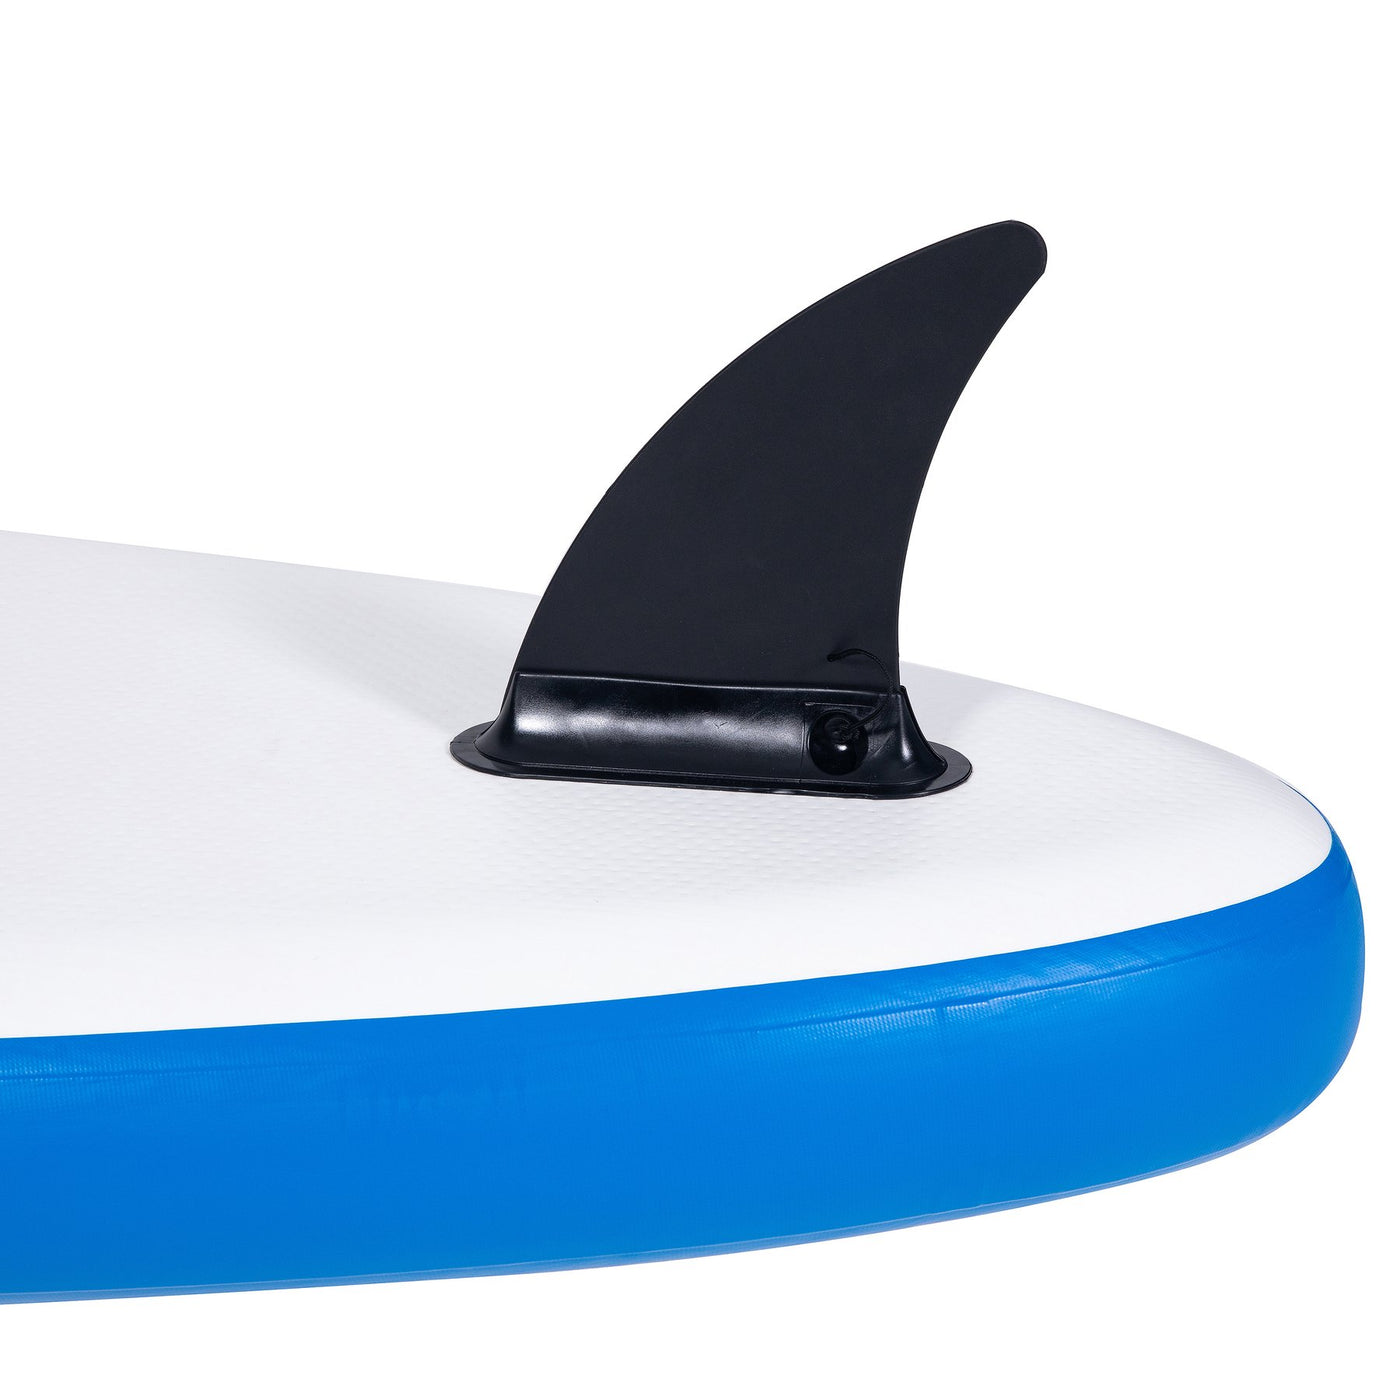 Paddle Paddle Gonflable SUP pour enfants 7'8 »